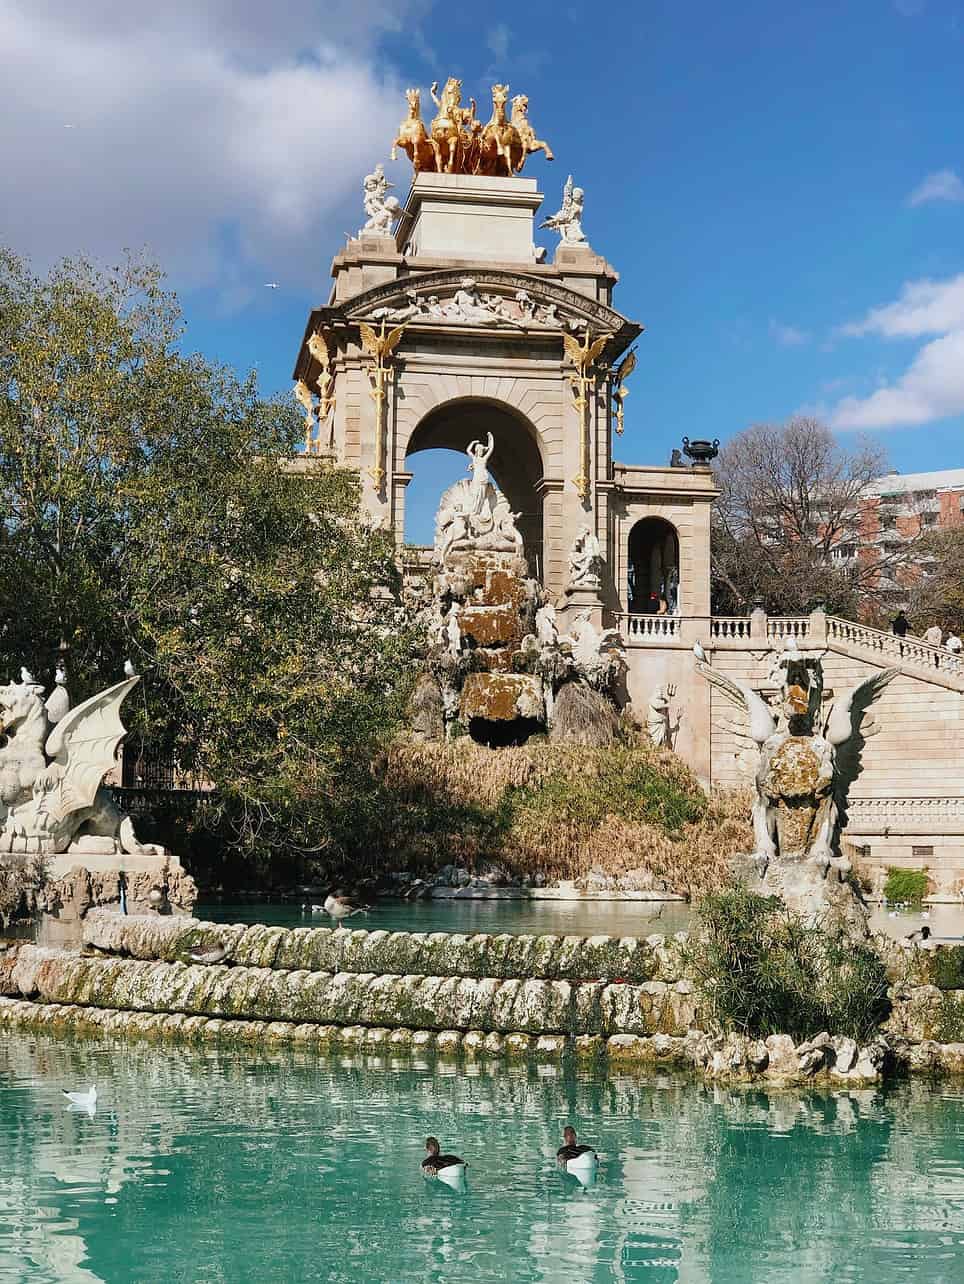 Visit one of Barcelona's parks on Valentine's Day